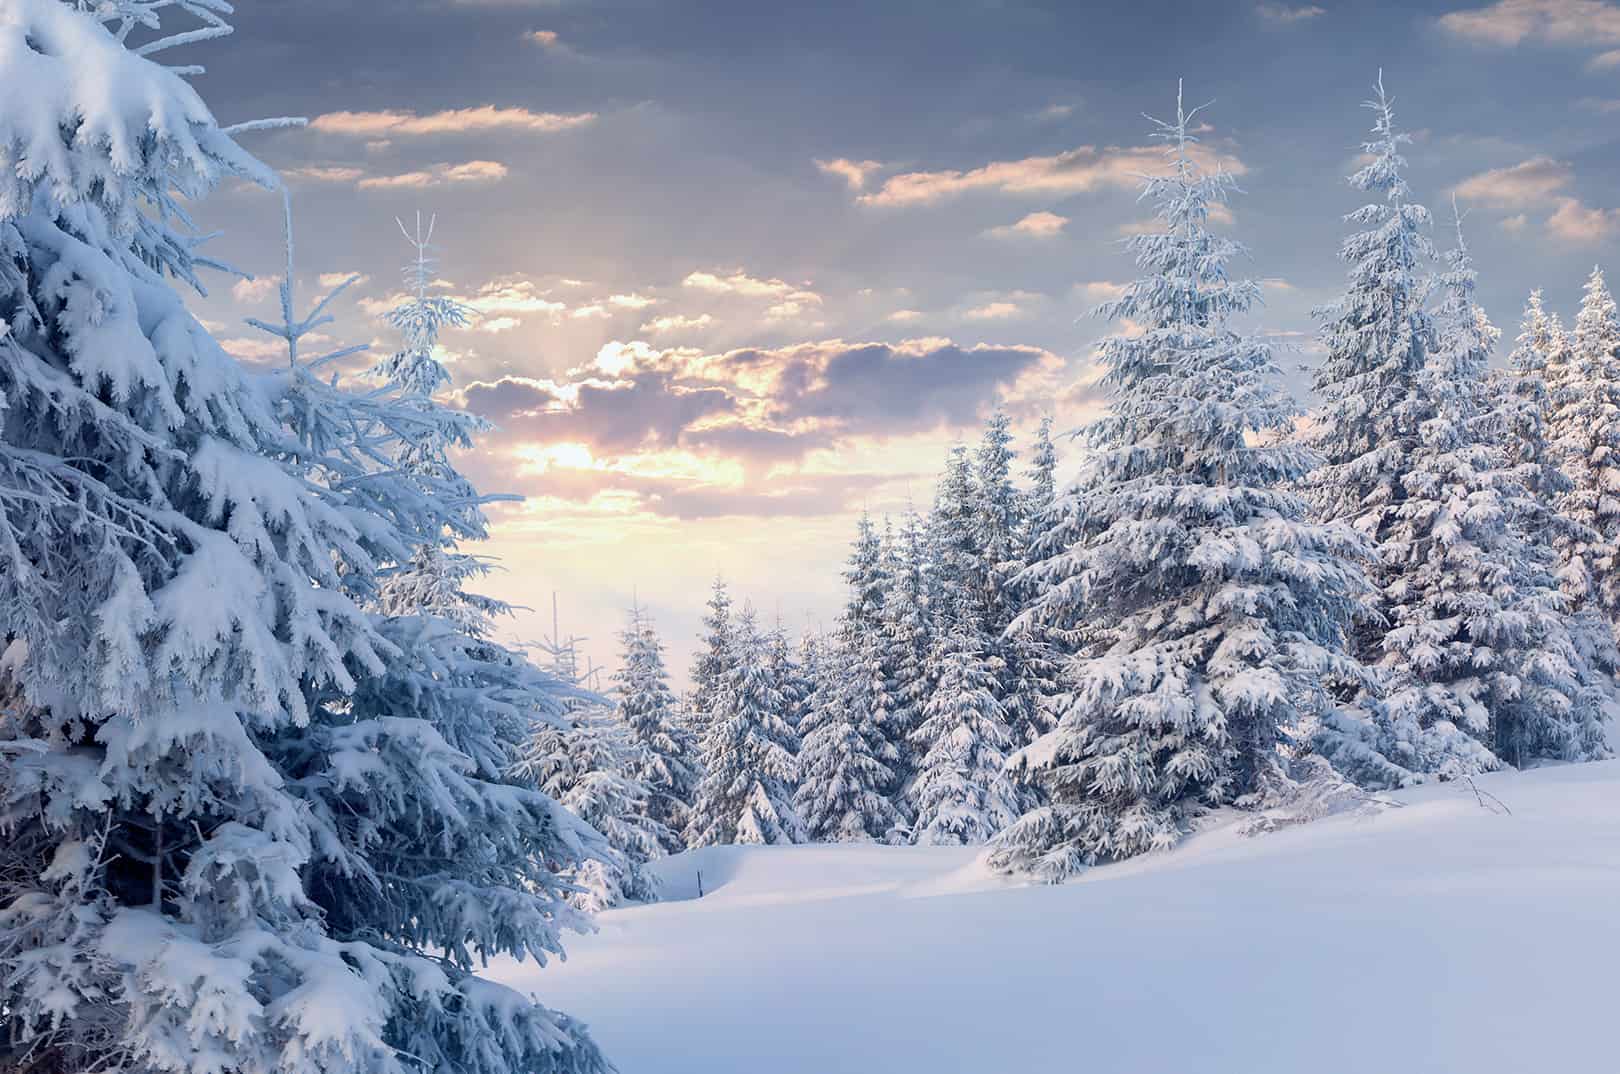 waldgeschichten-tipp-wald-winter-winterwaldwald-tief-verschneit-sonnenaufgang-am-horizont